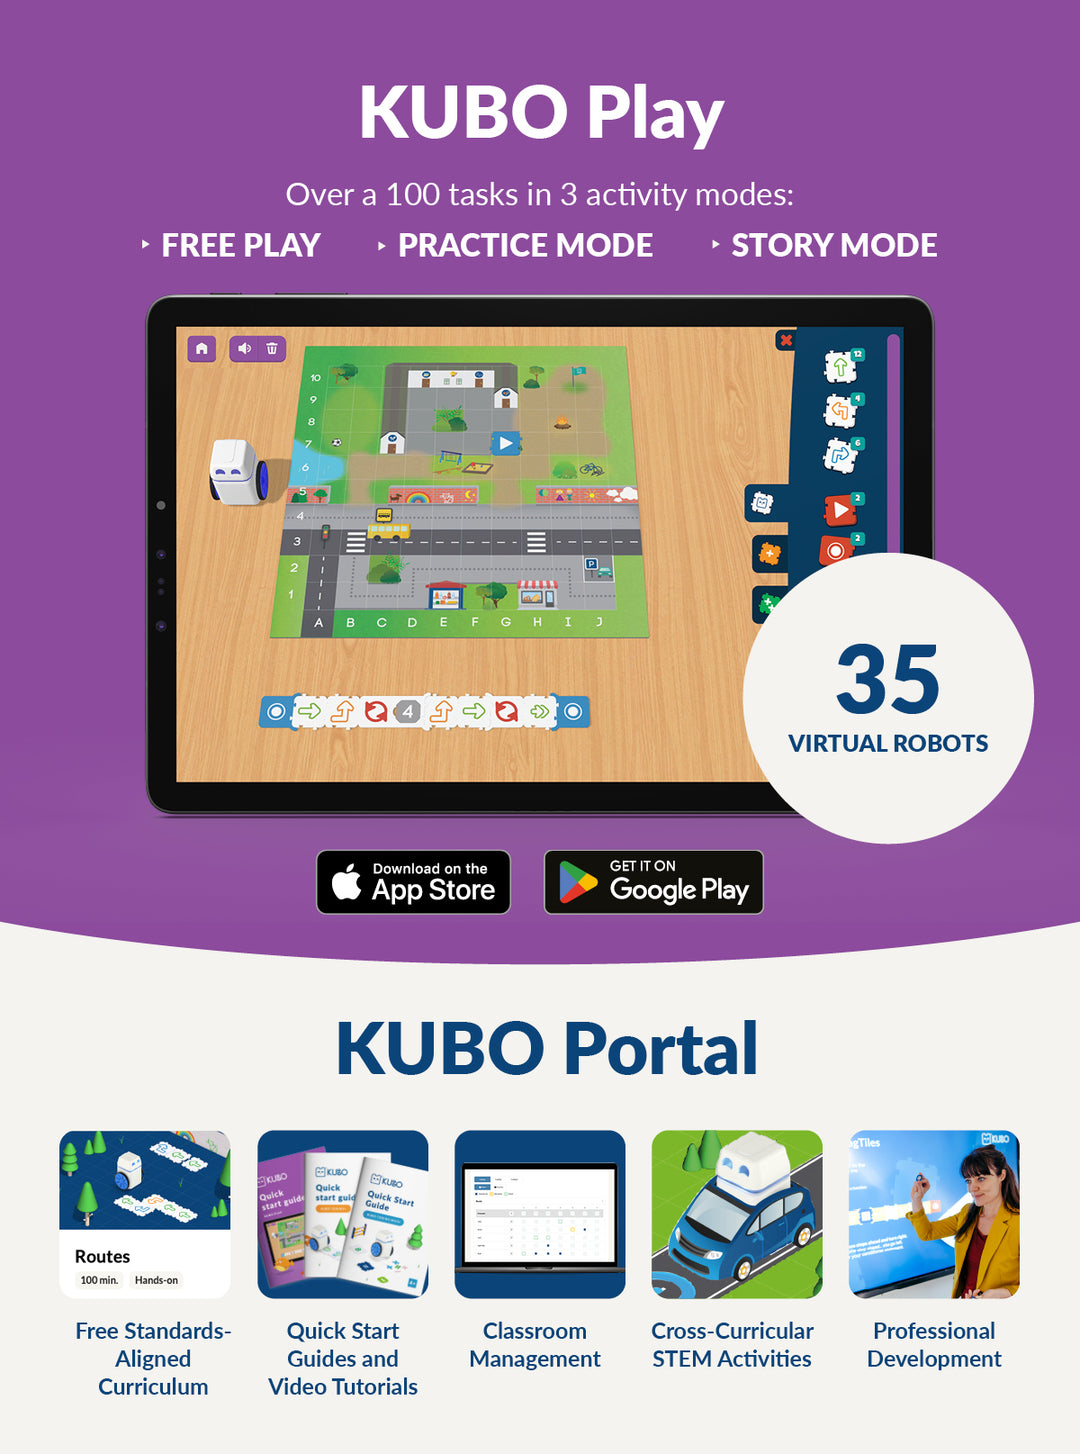 KUBO Play Classroom